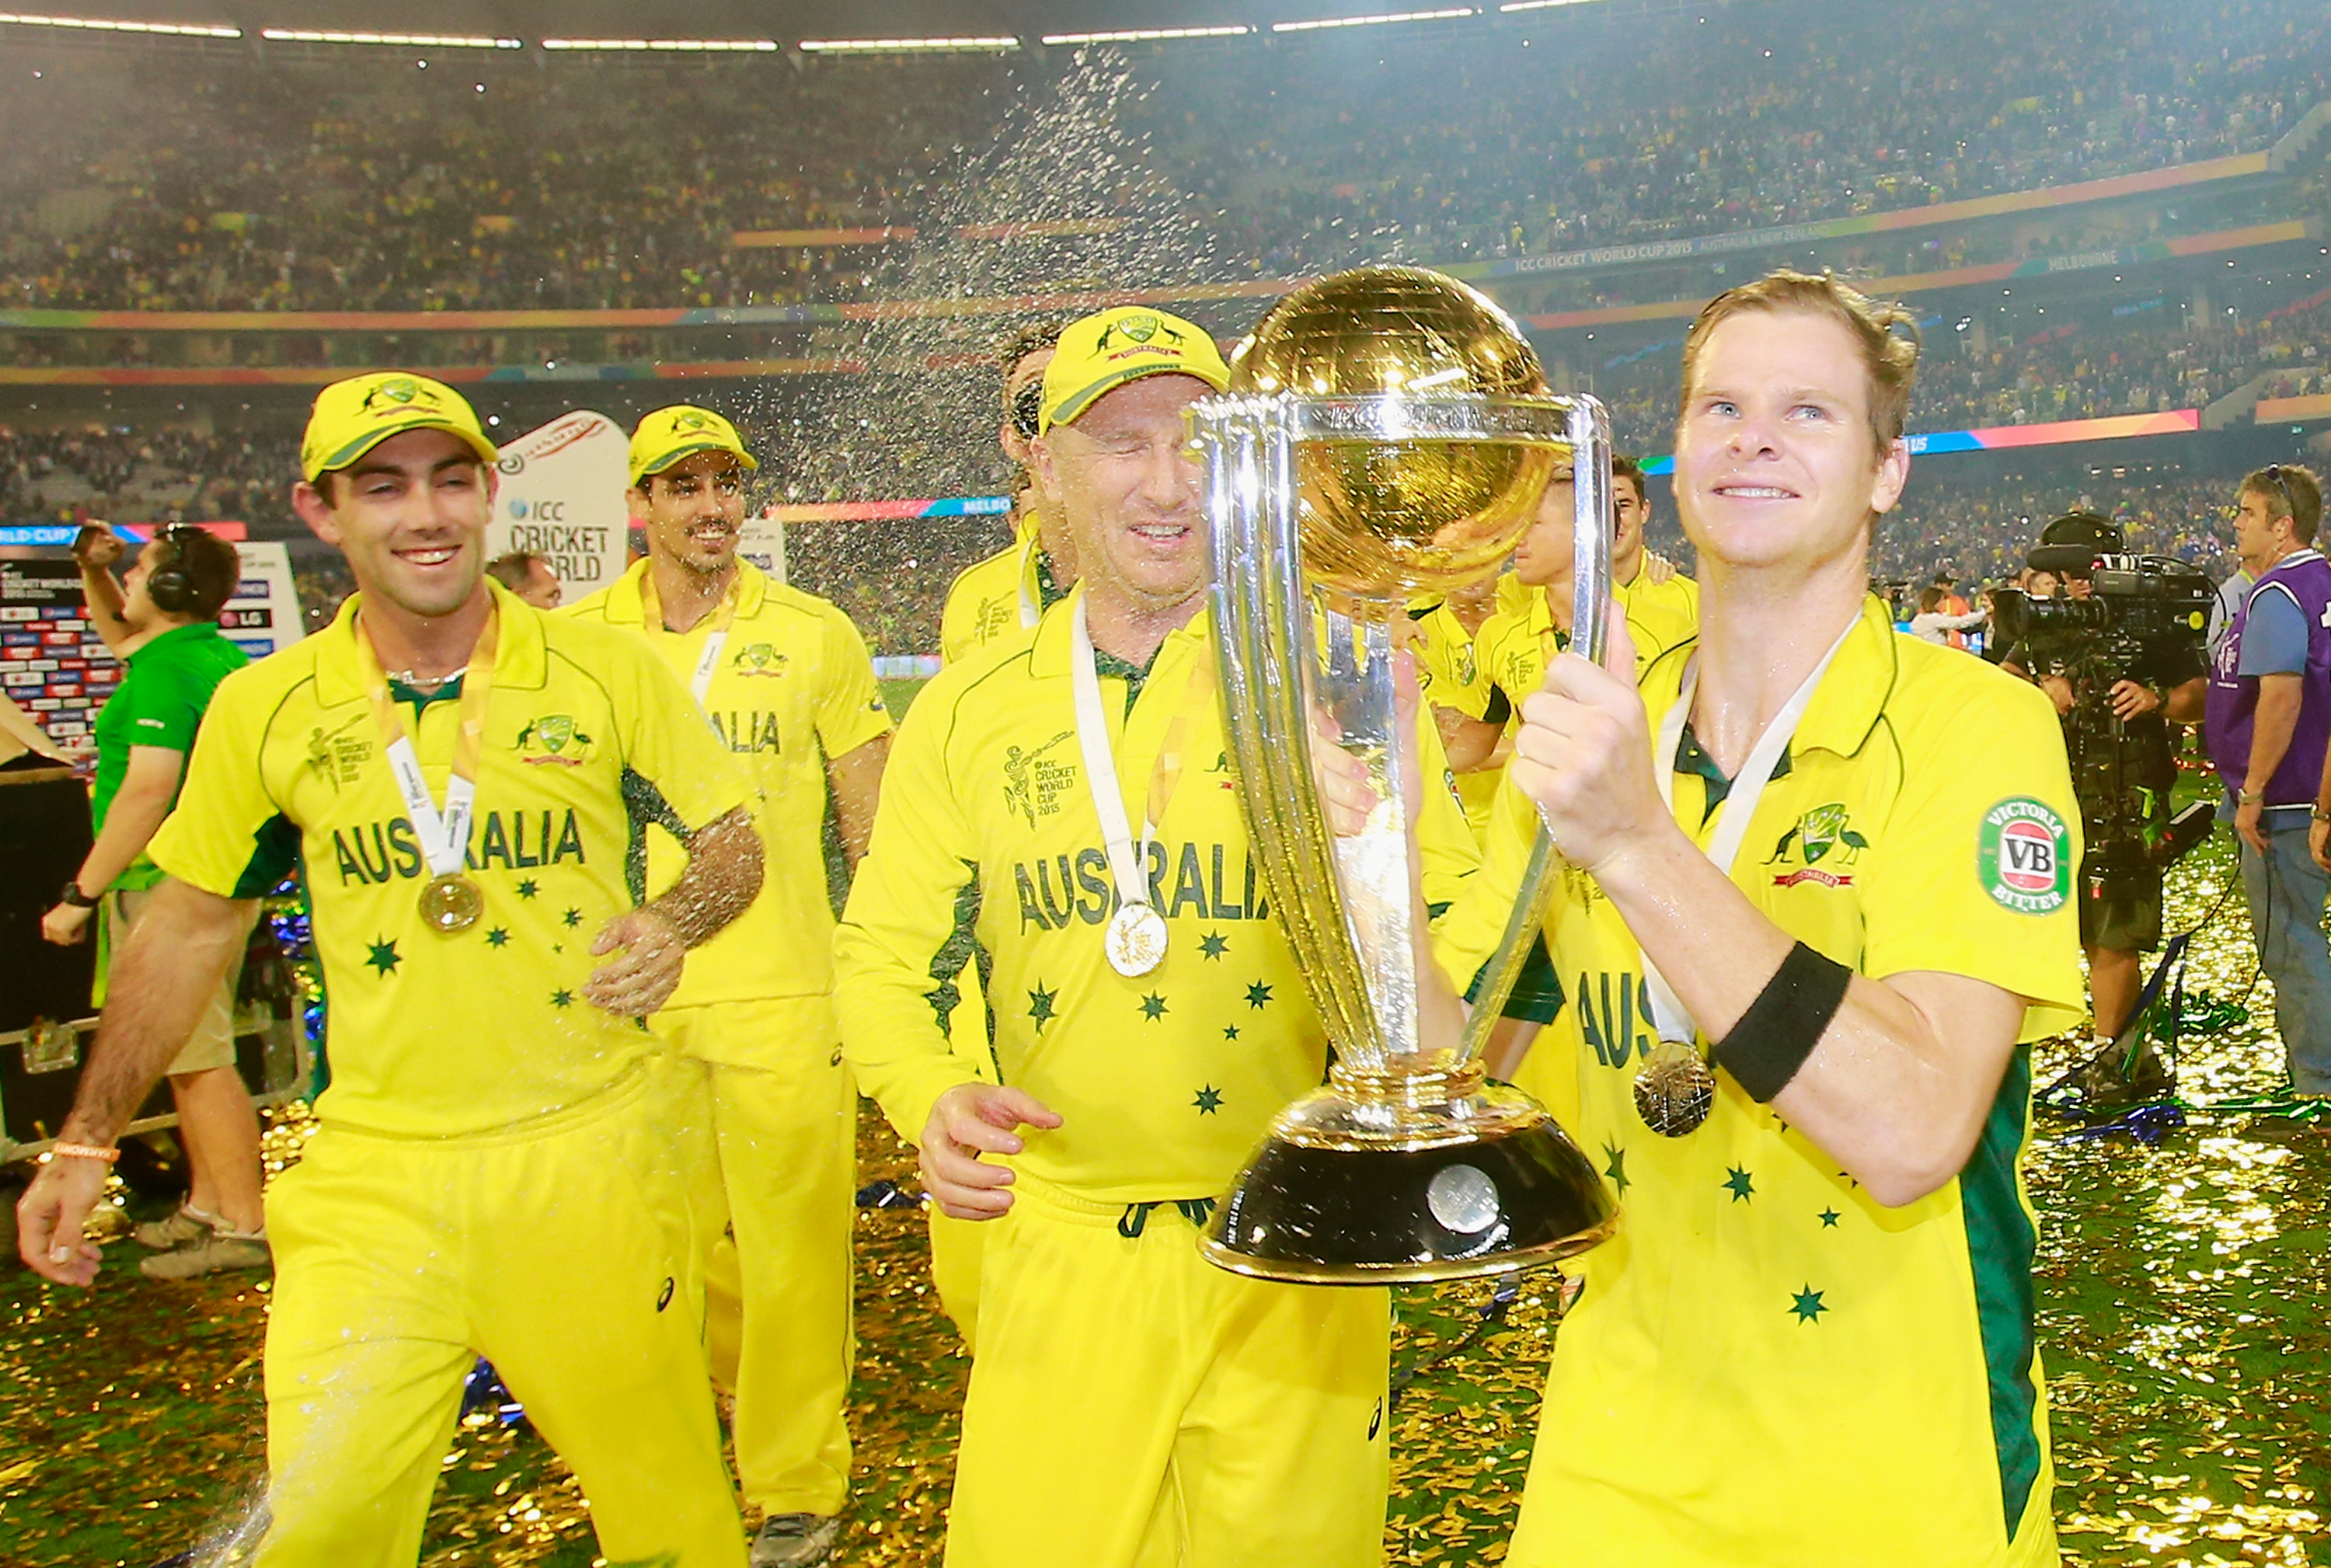 Cricket World Cup 2023  Cricket World Cup 2023 Australia Team  Australian Team In Icc ODI WC History  Cricket Australia  Australian Team In ICC ODI World Cup  ഏകദിന ക്രിക്കറ്റ് ലോകകപ്പ് 2023  ഓസ്‌ട്രേലിയന്‍ ക്രിക്കറ്റ് ടീം  ഓസ്‌ട്രേലിയ ഏകദിന ലോകകപ്പ് സ്ക്വാഡ്  ഓസ്‌ട്രേലിയ ഏകദിന ലോകകപ്പ് ചരിത്രം  ക്രിക്കറ്റിലെ ഓസ്‌ട്രേലിയന്‍ ആധിപത്യം